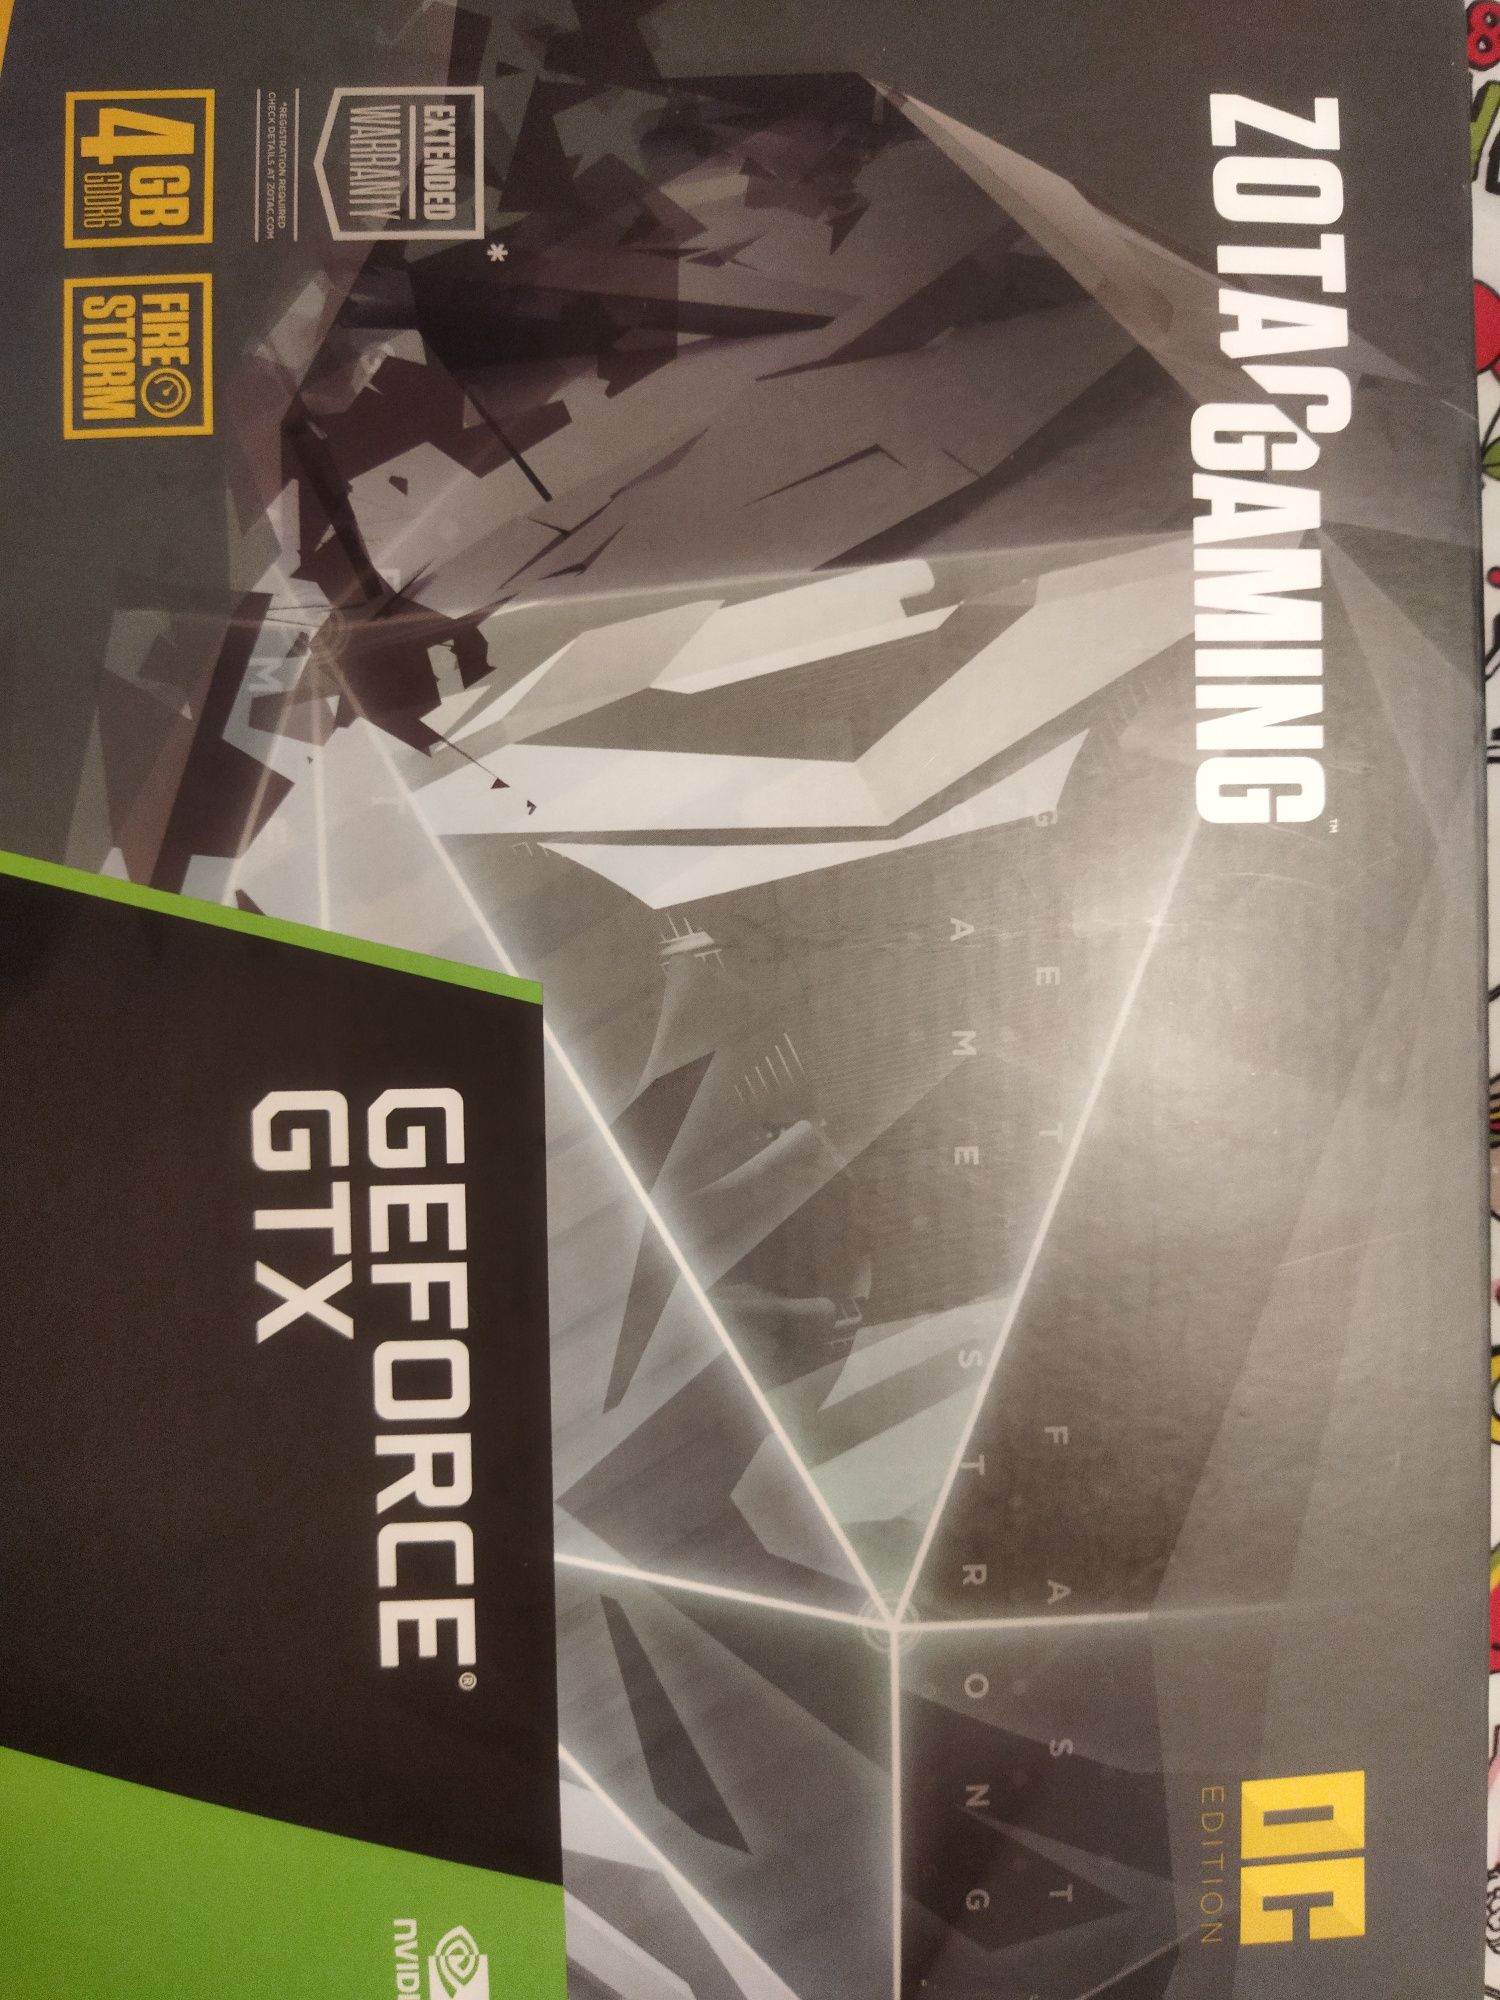 Placa Gráfica Zotac Gaming GeForce GTX 1650 OC 4GB